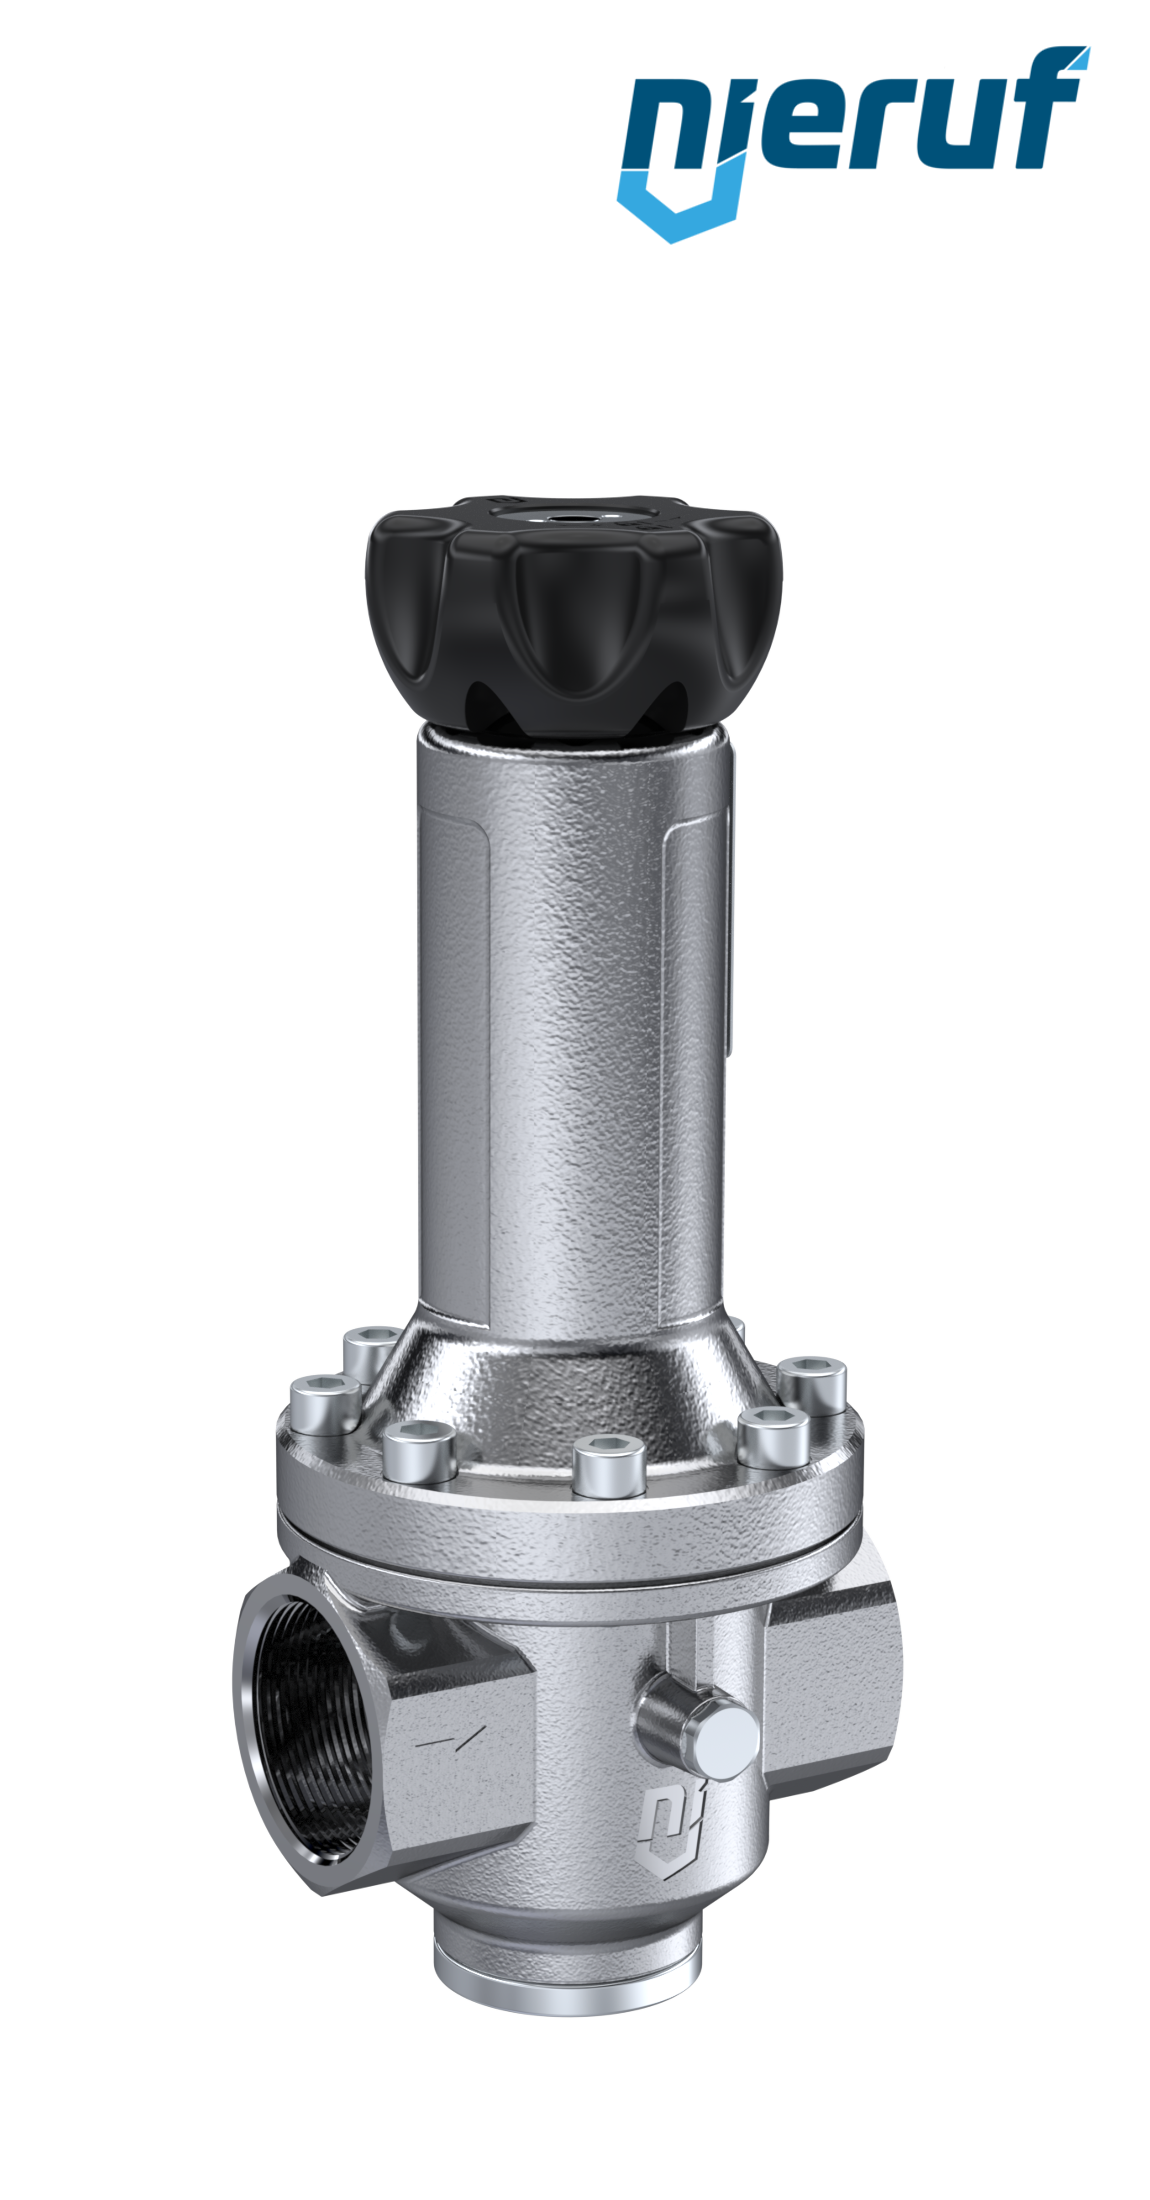 precision-pressure reducing valve 2" inch DM15 stainless steel FKM 10.0 - 50.0 bar